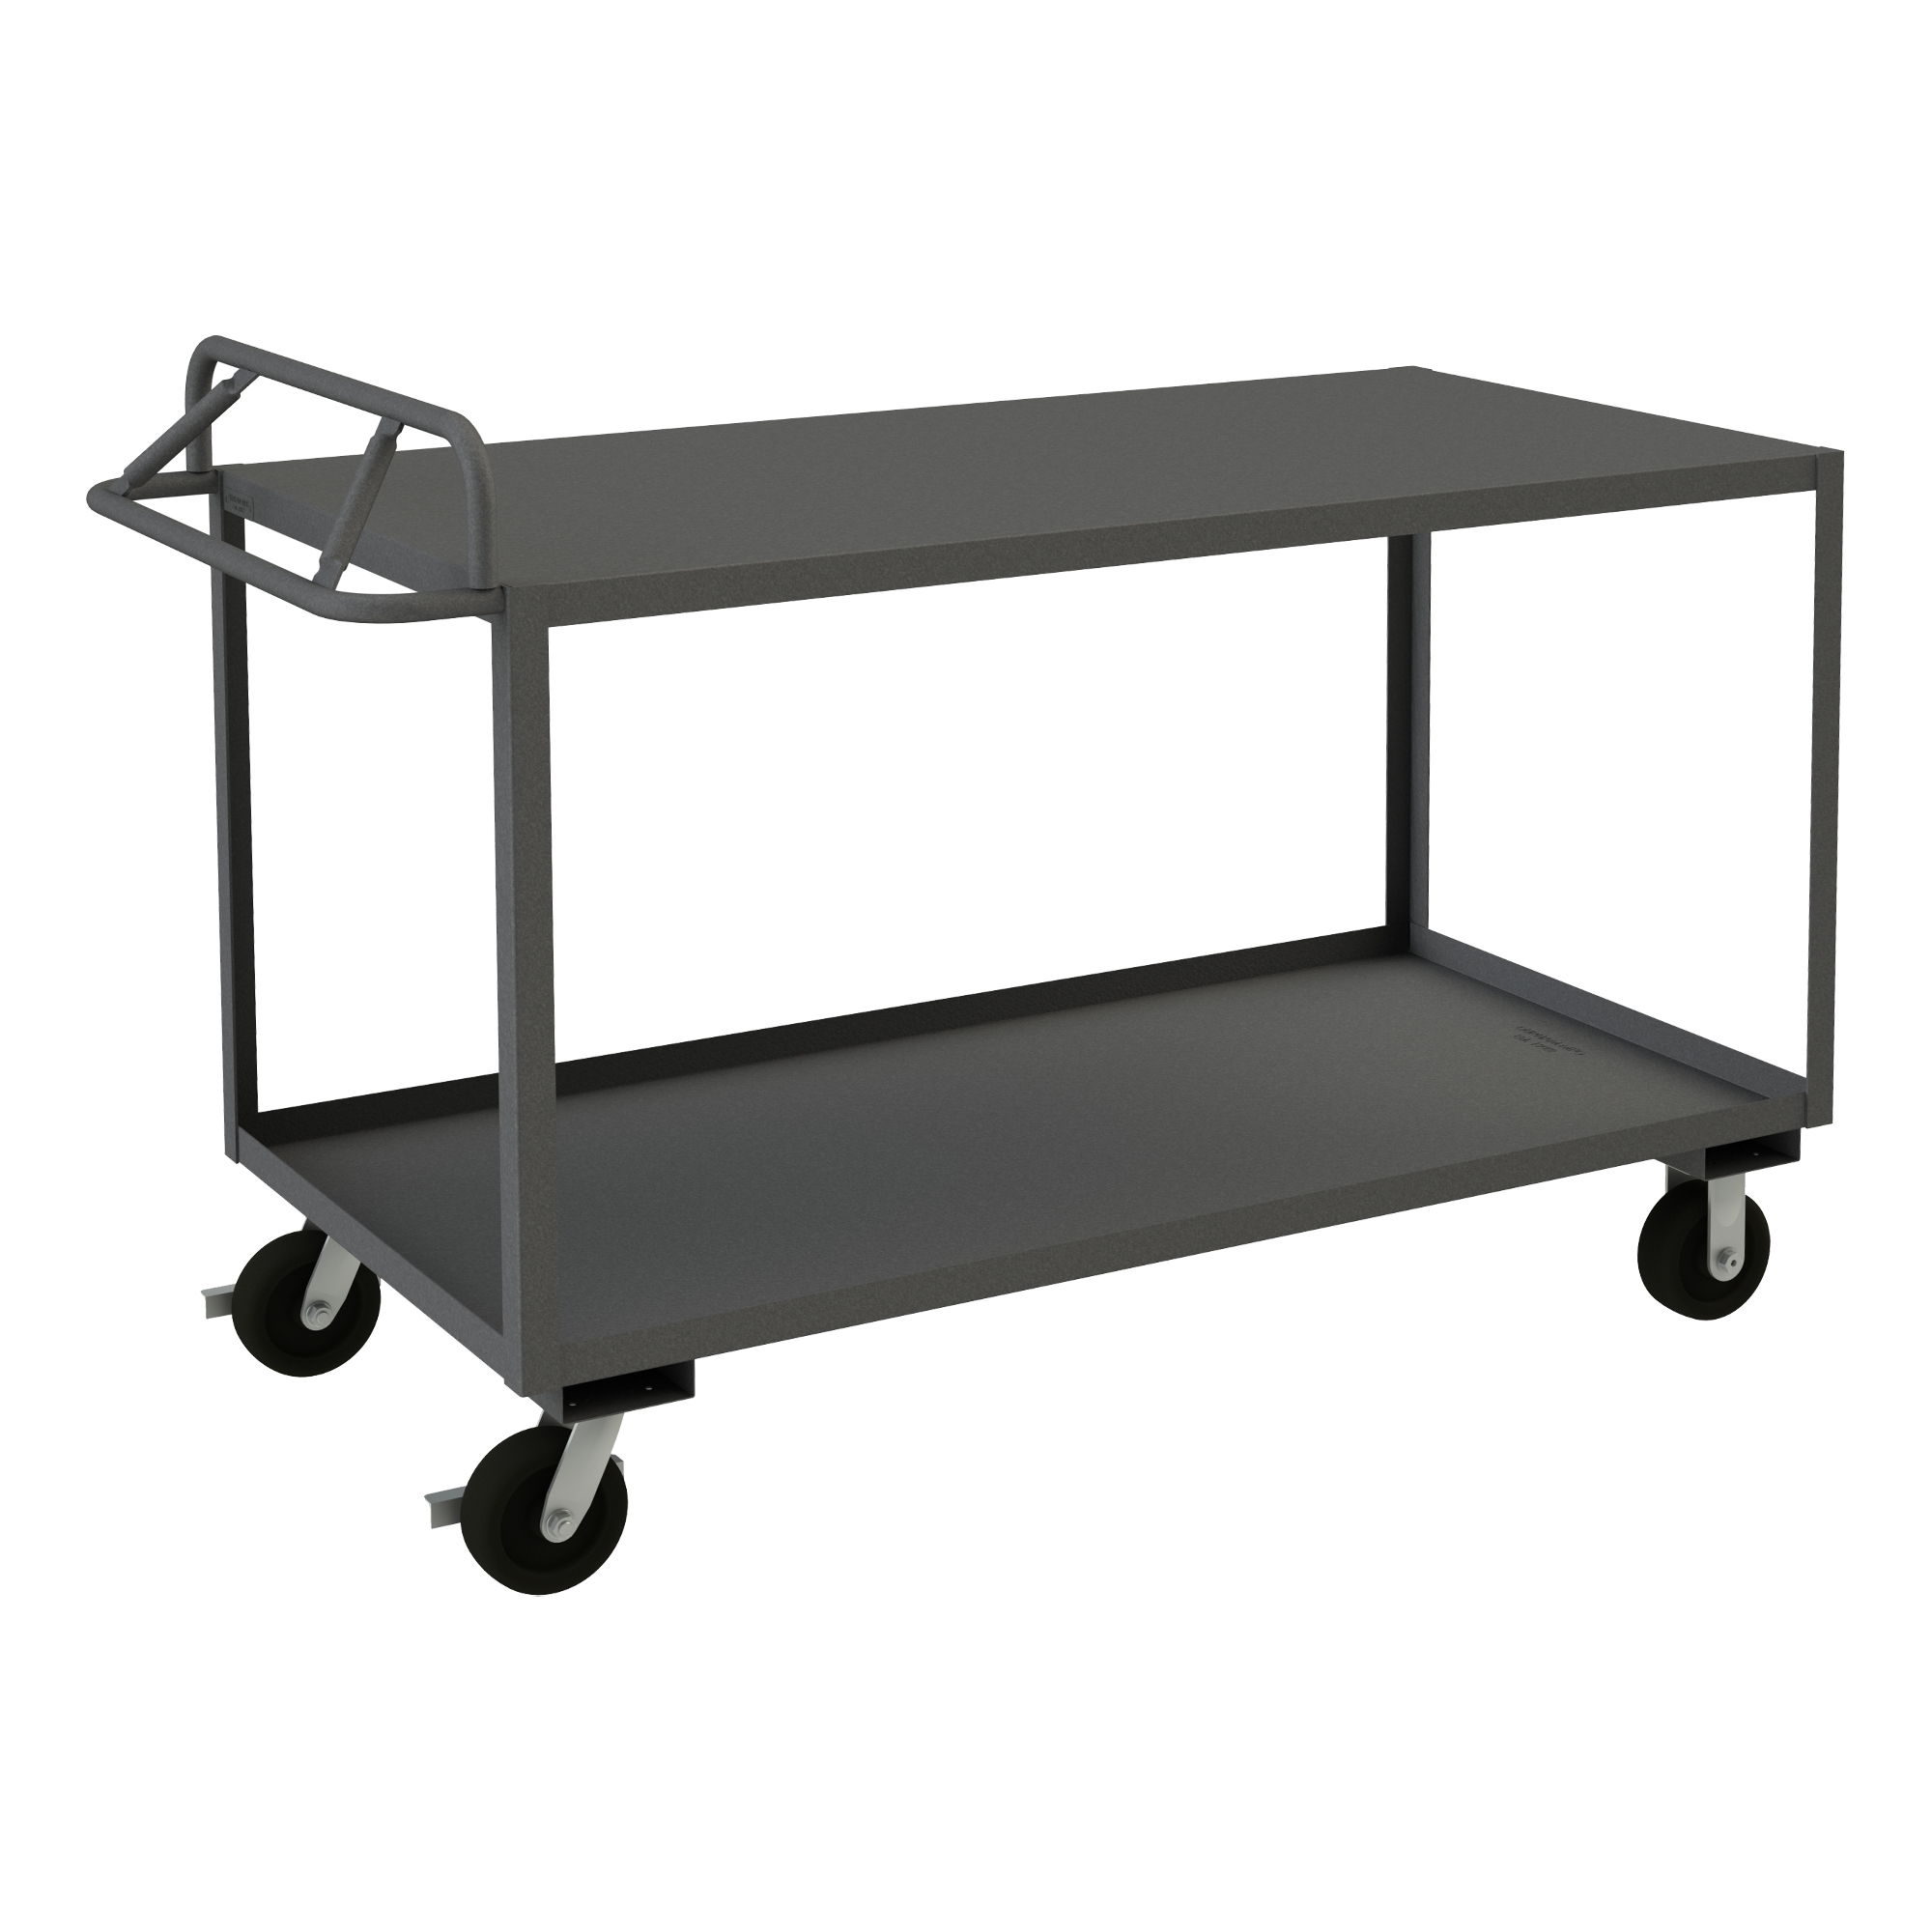 Stock Cart With Ergonomic Handle, 2 Shelf, Size 30-1/4 x 66-1/4 x 45 Inch, Gray